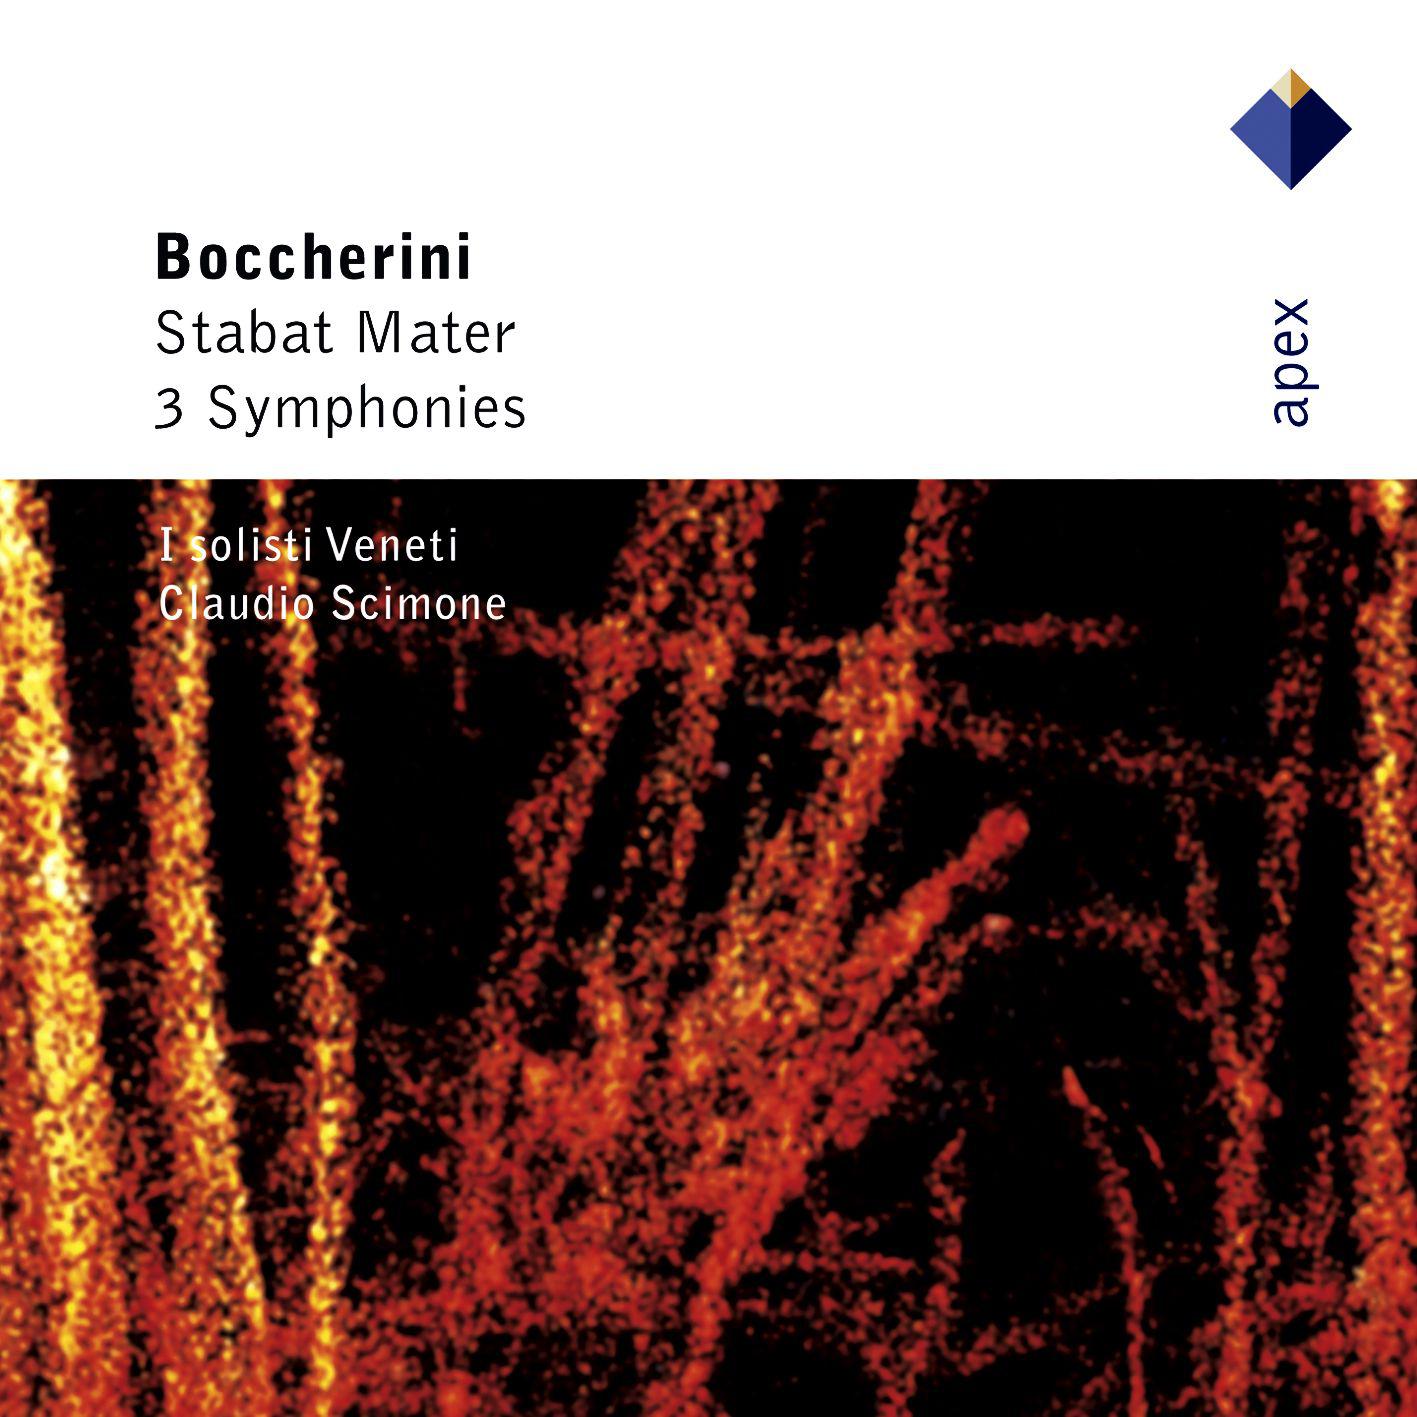 Boccherini : Symphony No.4 in D minor Op.12 G506, 'La Casa del diavolo' : III Andante sostenuto - Allegro con moto